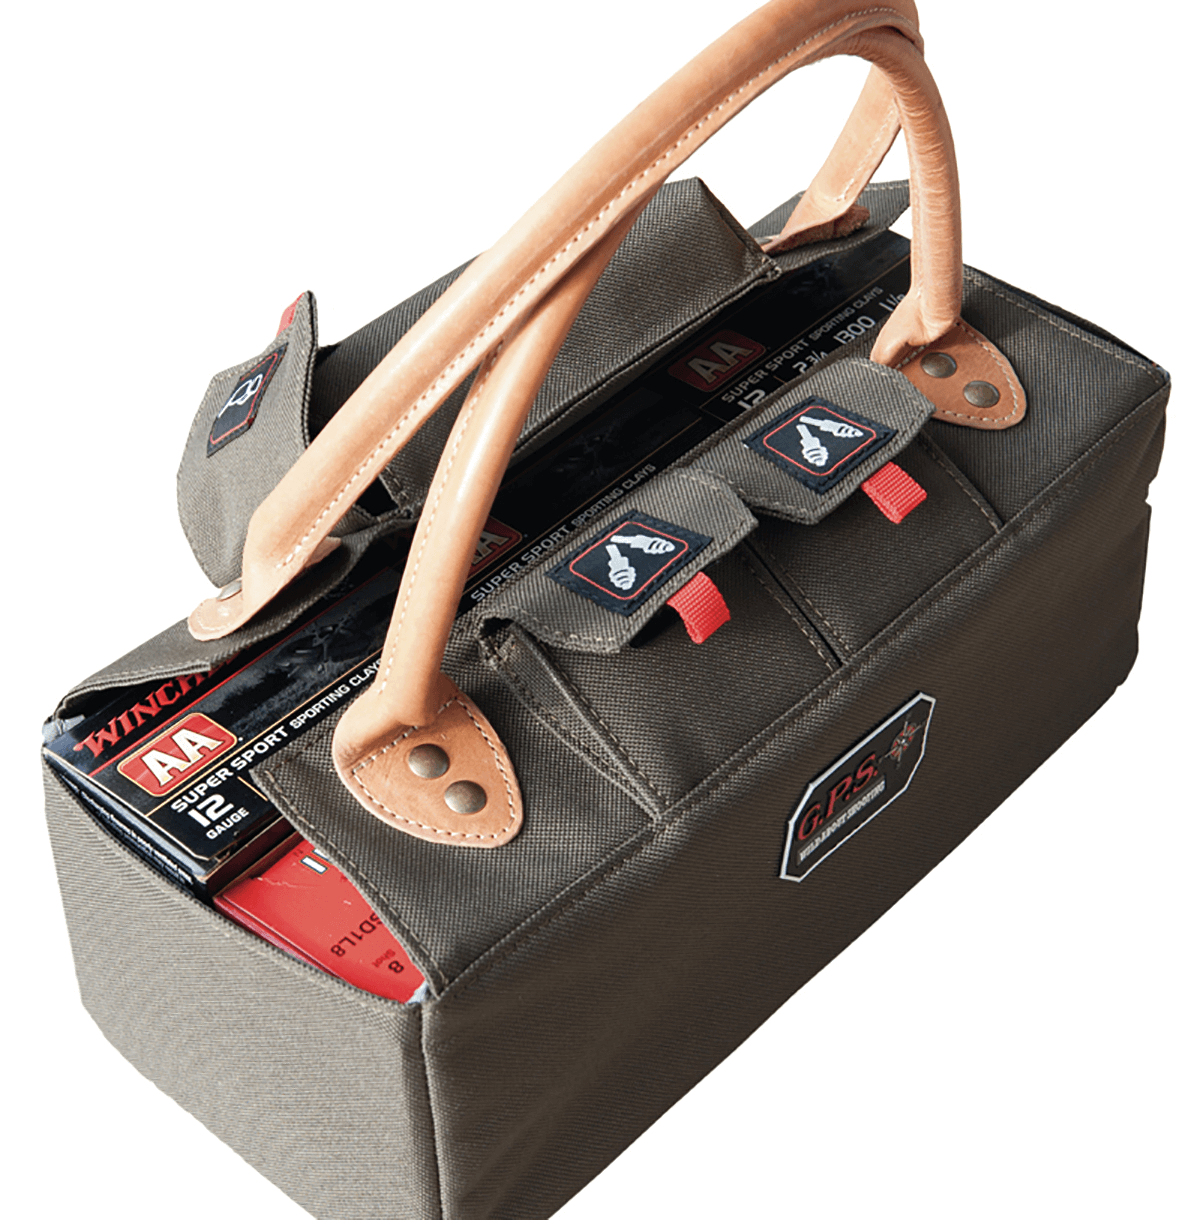 Dual Digital Gauge & Pneumatic Switches Air Bag Pump up Kit to suit a wide  range